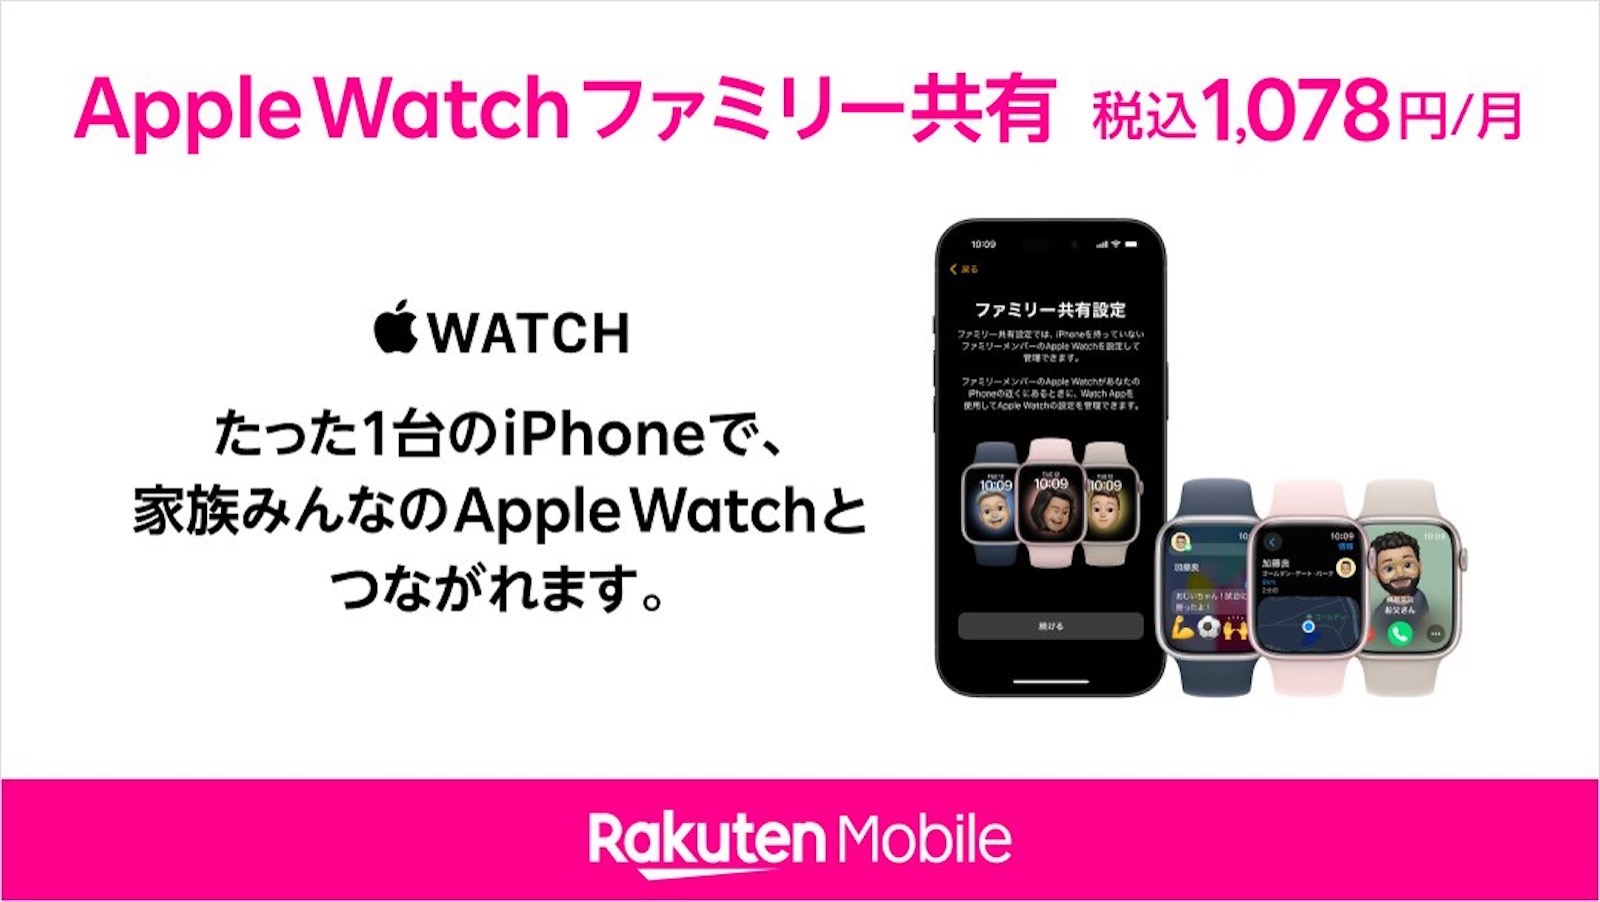 Apple Watch Famliy Share